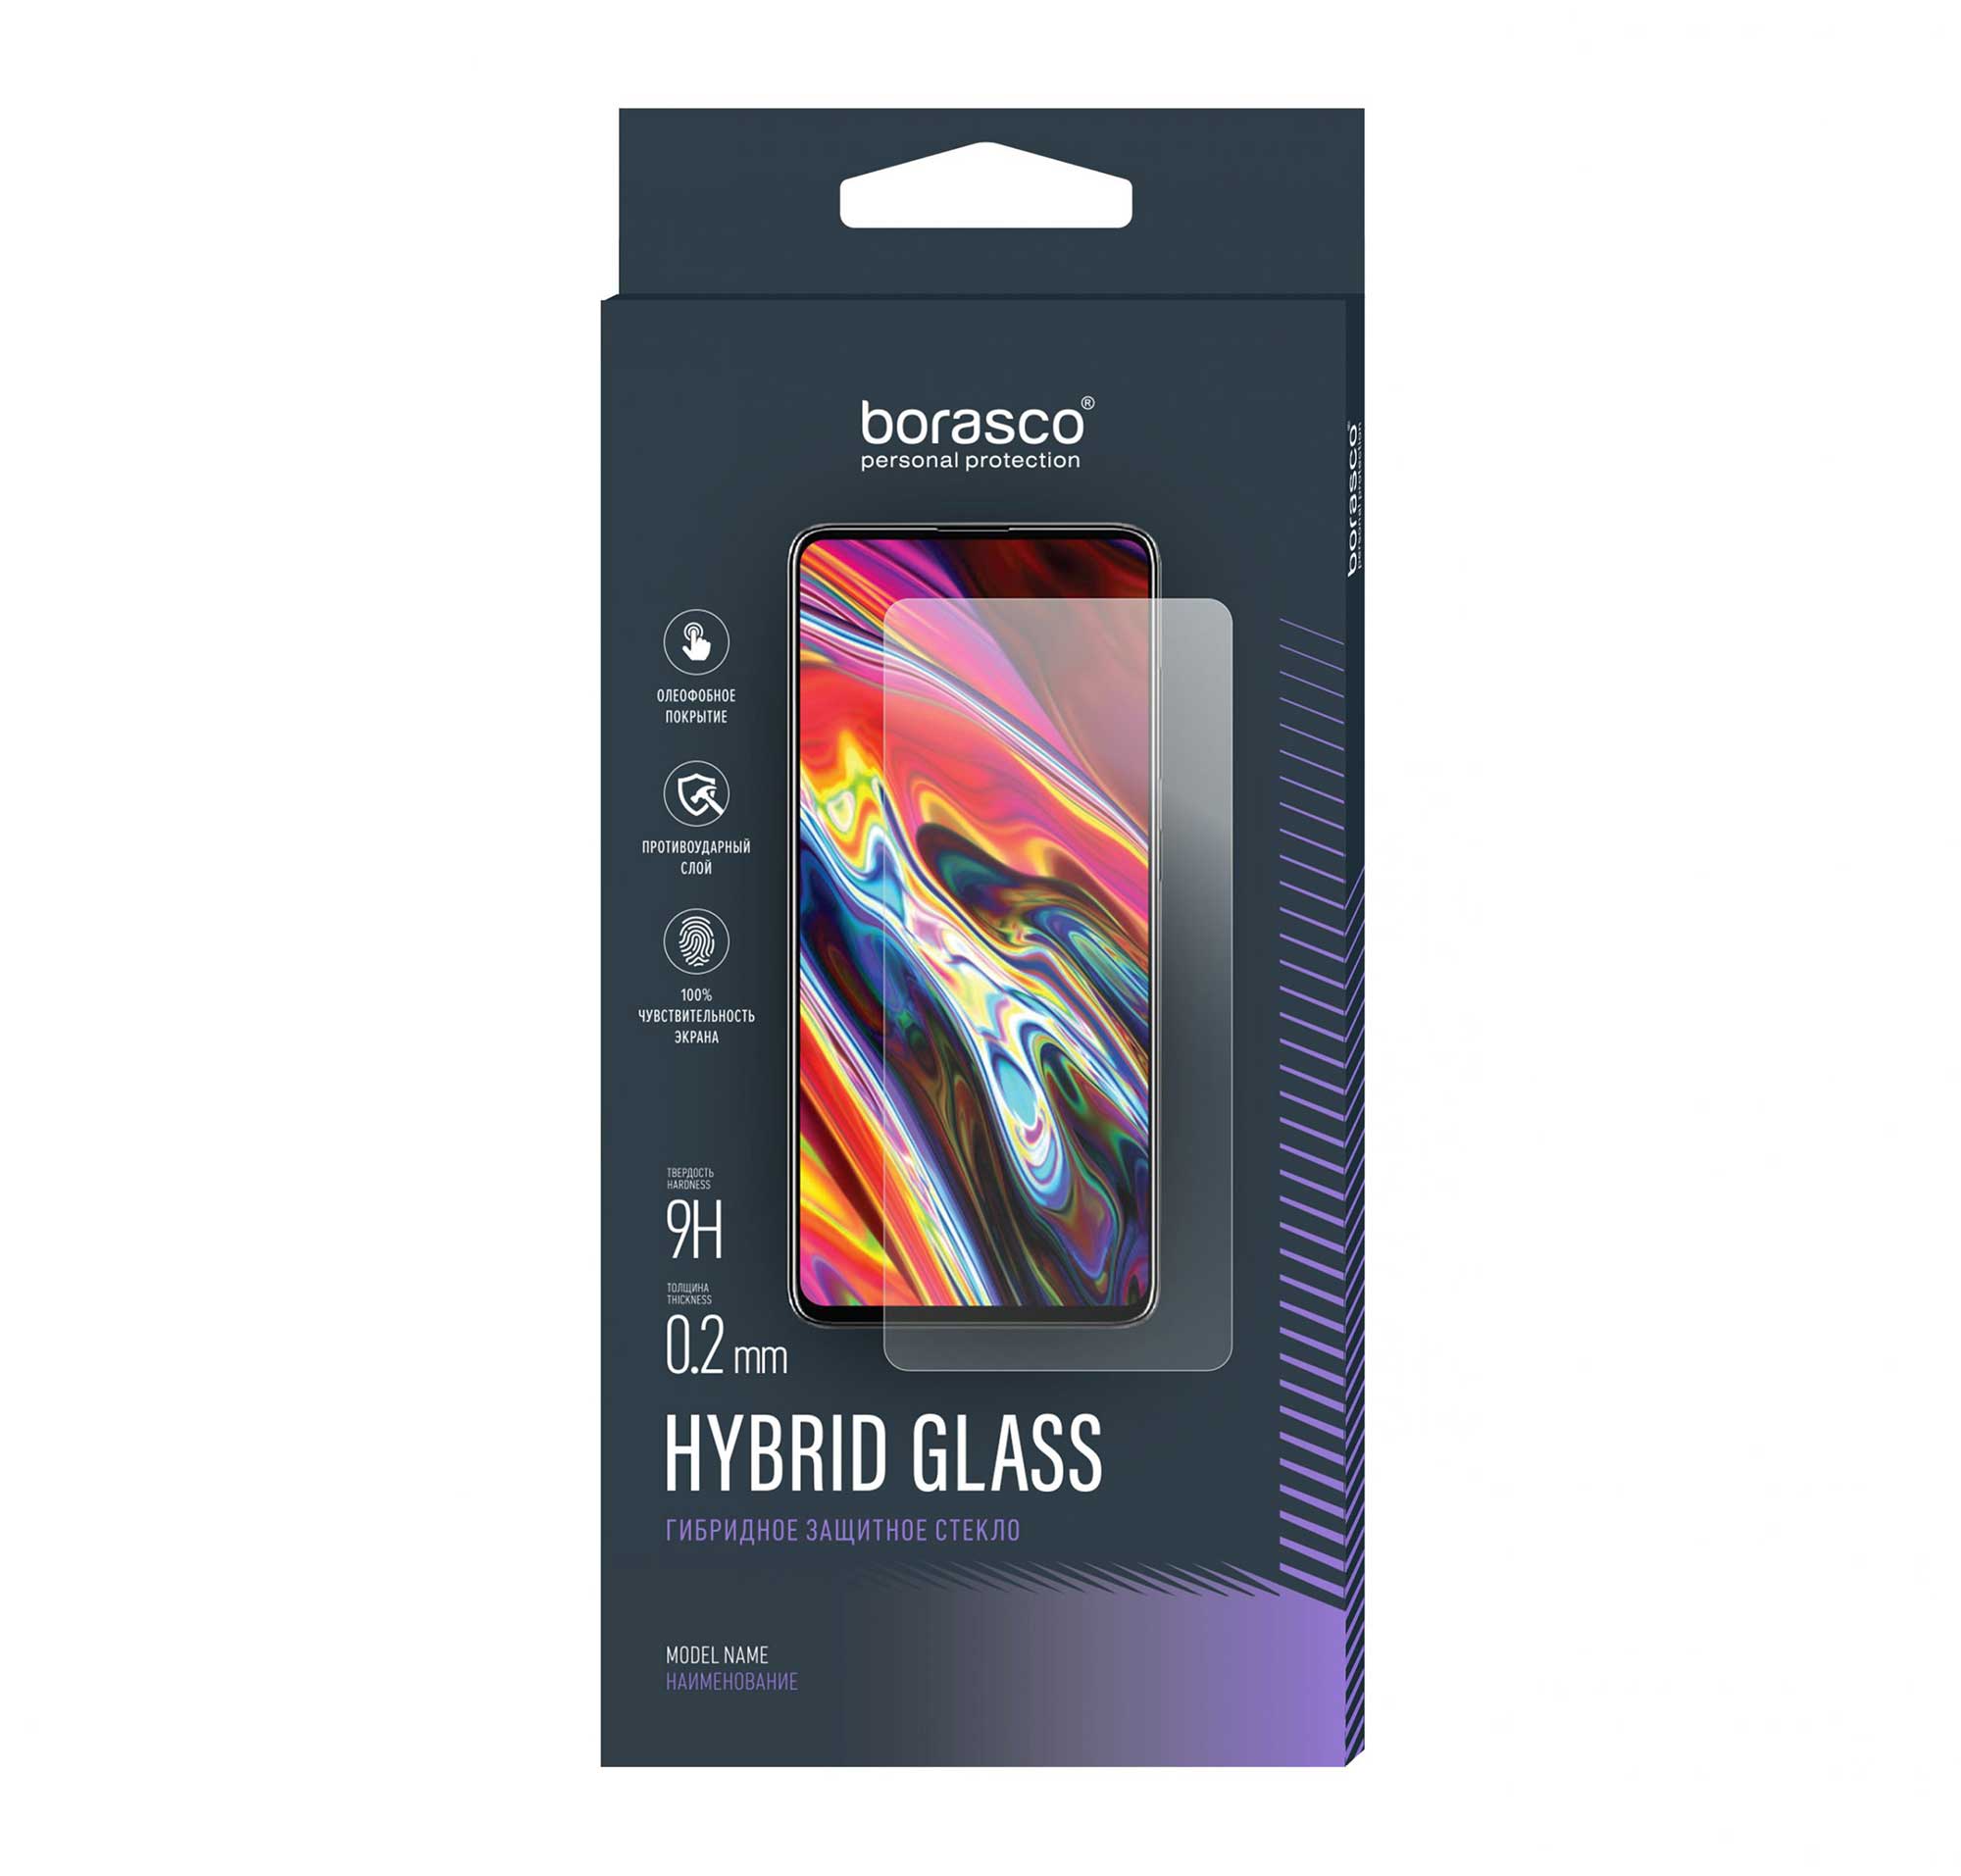 Защитное стекло BoraSCO Hybrid Glass для Samsung Galaxy A22/ M22 защитное стекло mobix для samsung a22 4g a32 4g m32 m22 самсунг а22 а32 м22 м32 со светящейся рамкой